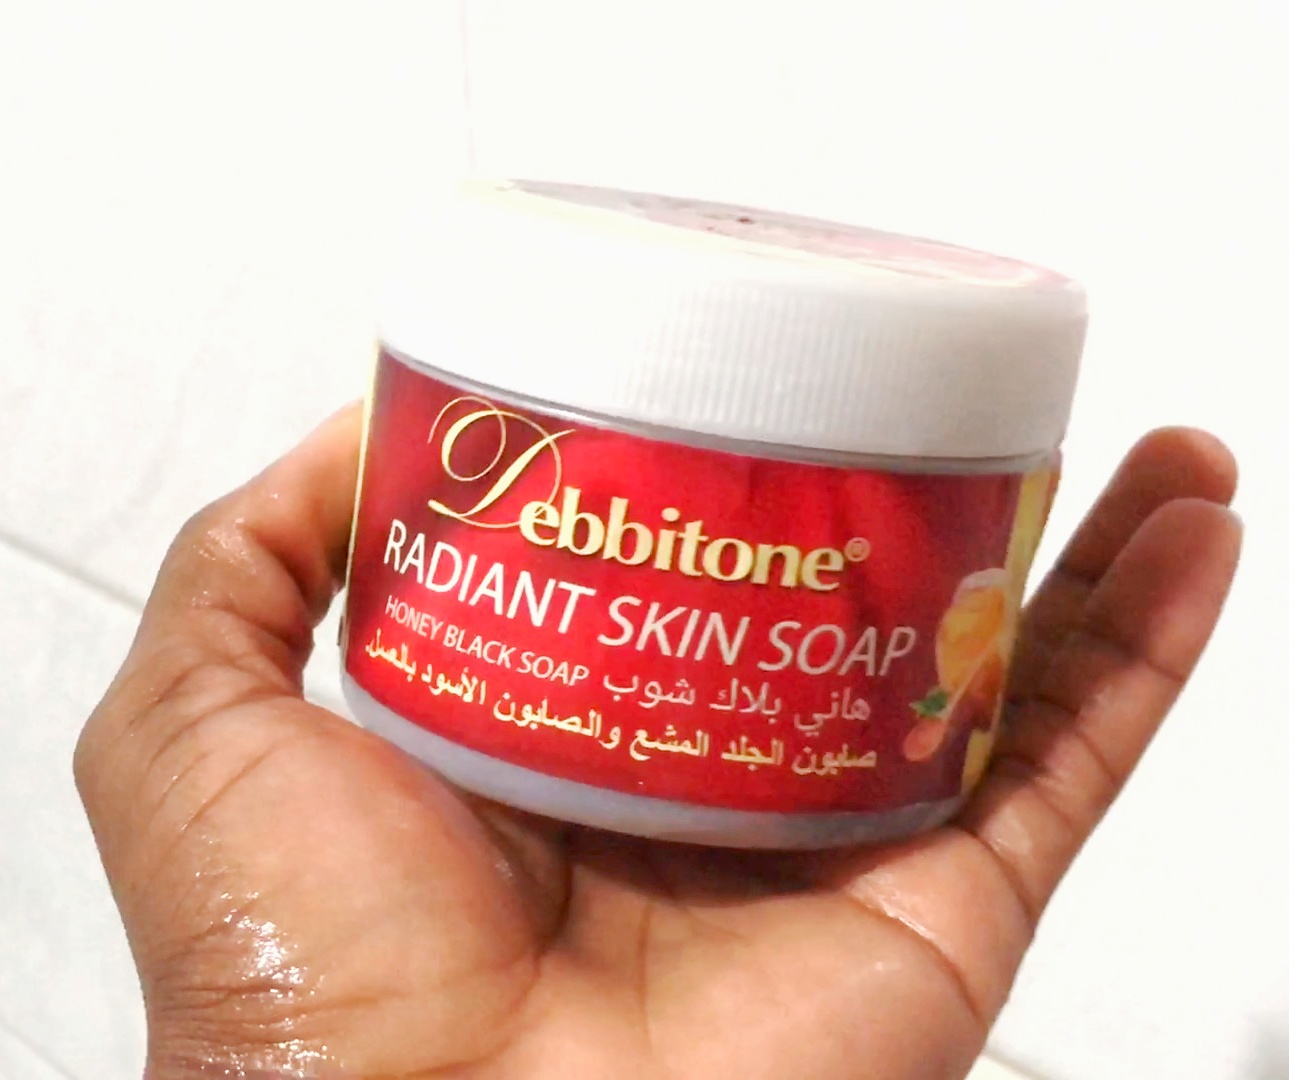 Debbitone radiant skin African black soap - honey